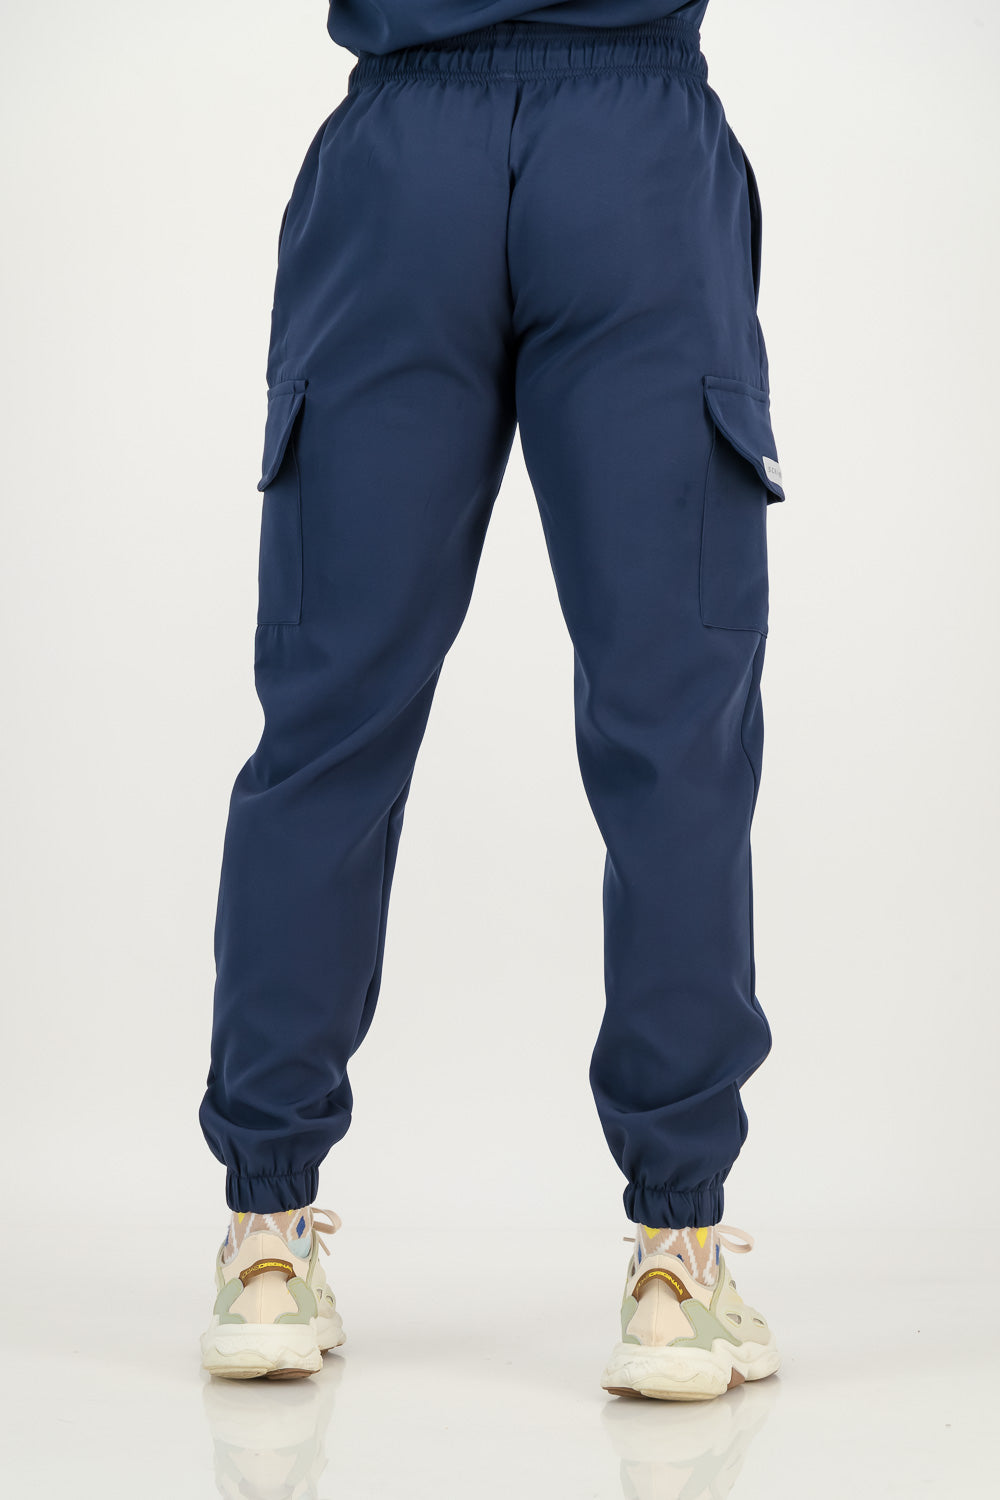 Men's Marine Blue Scrub Pants (NEW FABRIC)